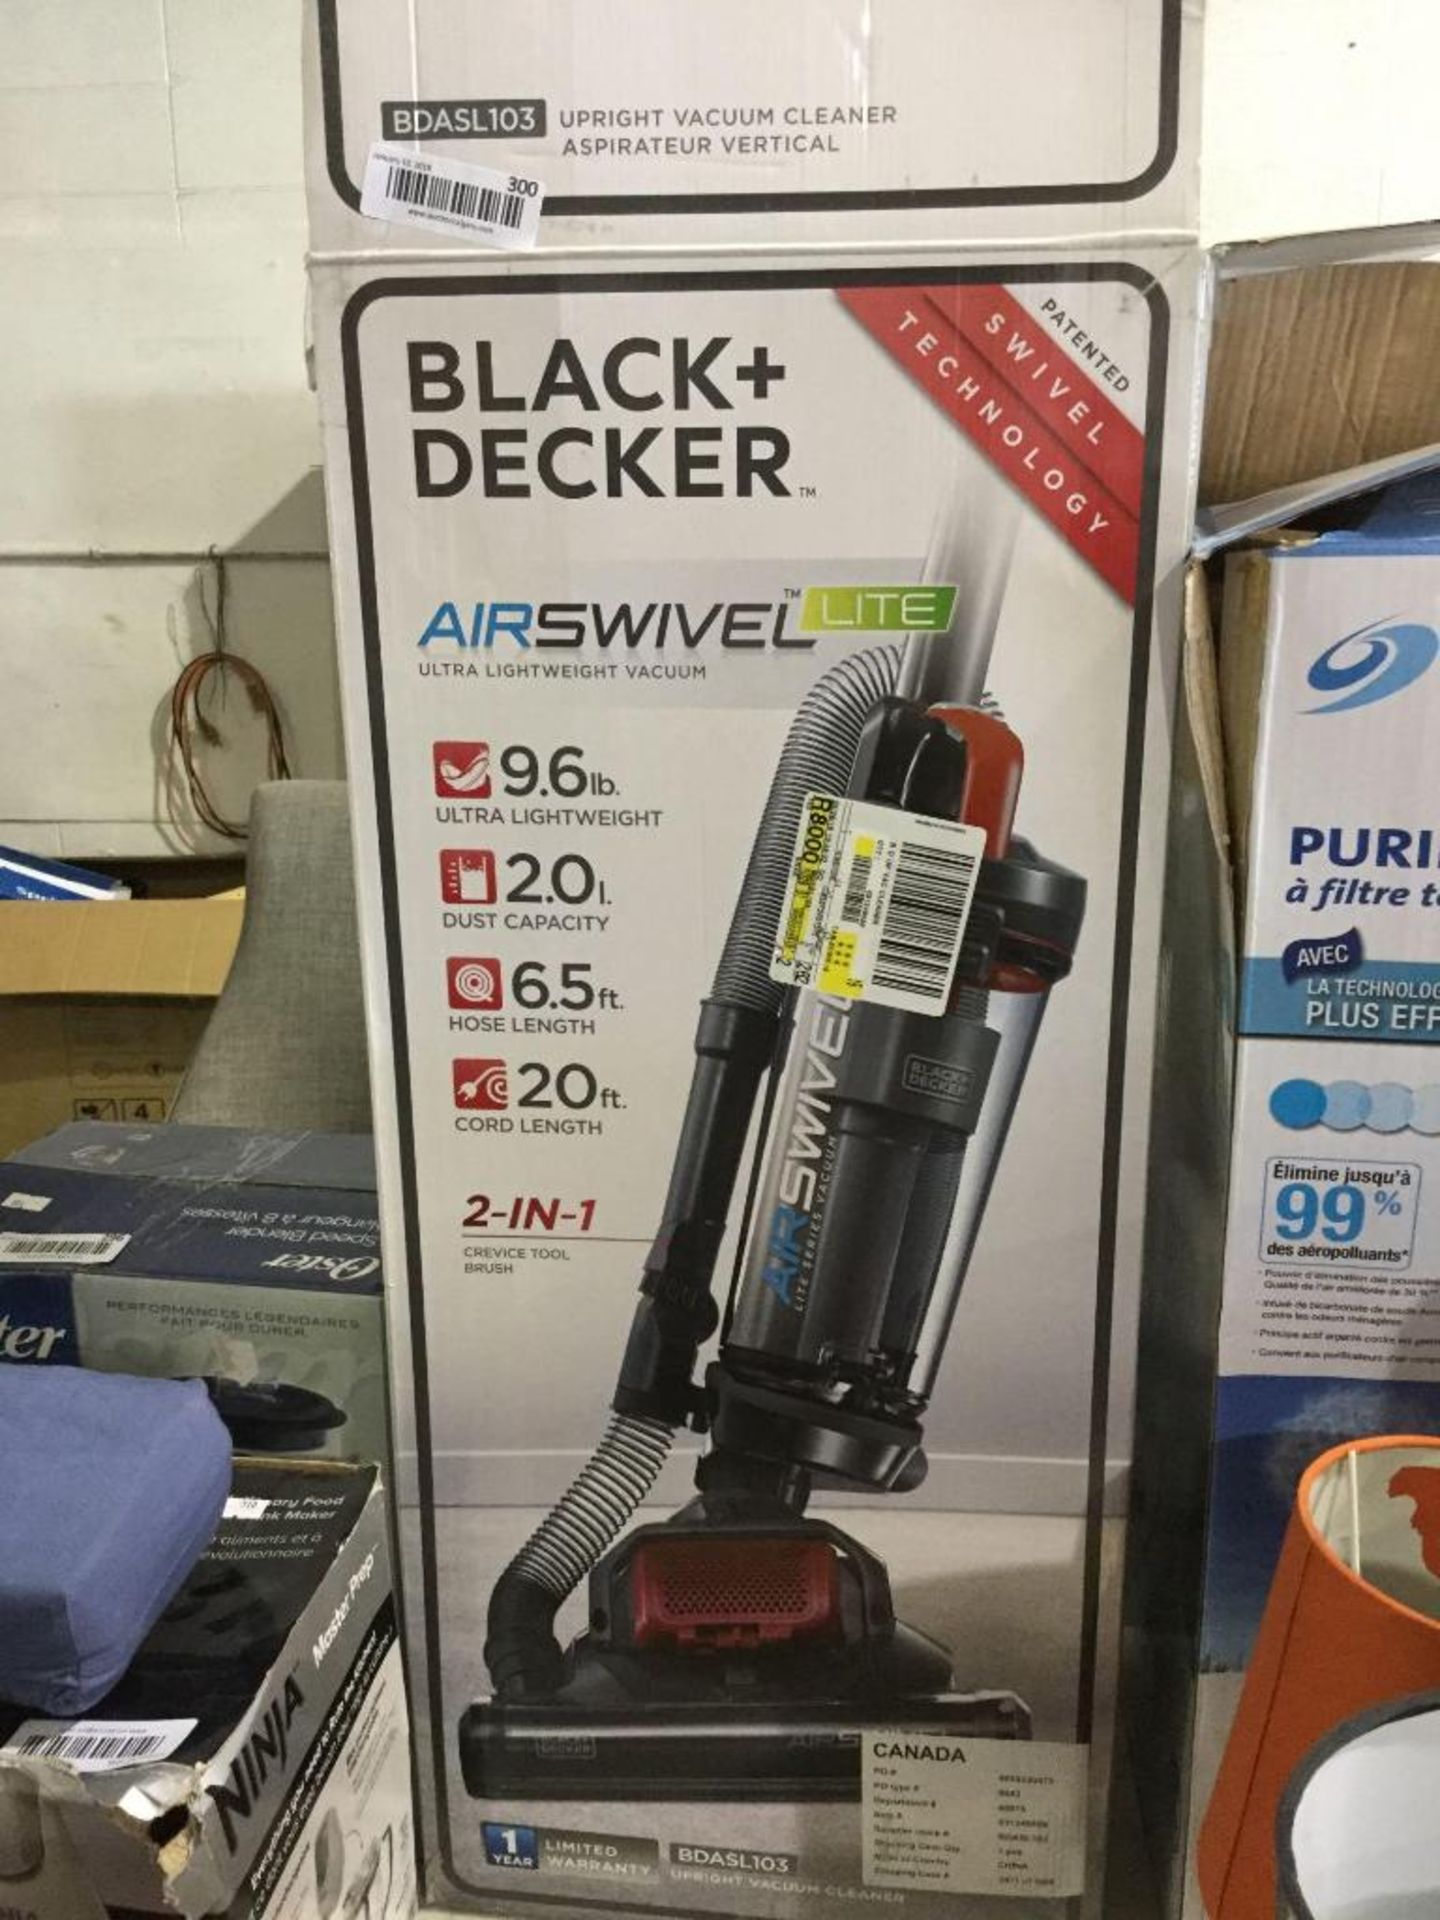 Black and Decker Airswivel Ultra Light Vacuum